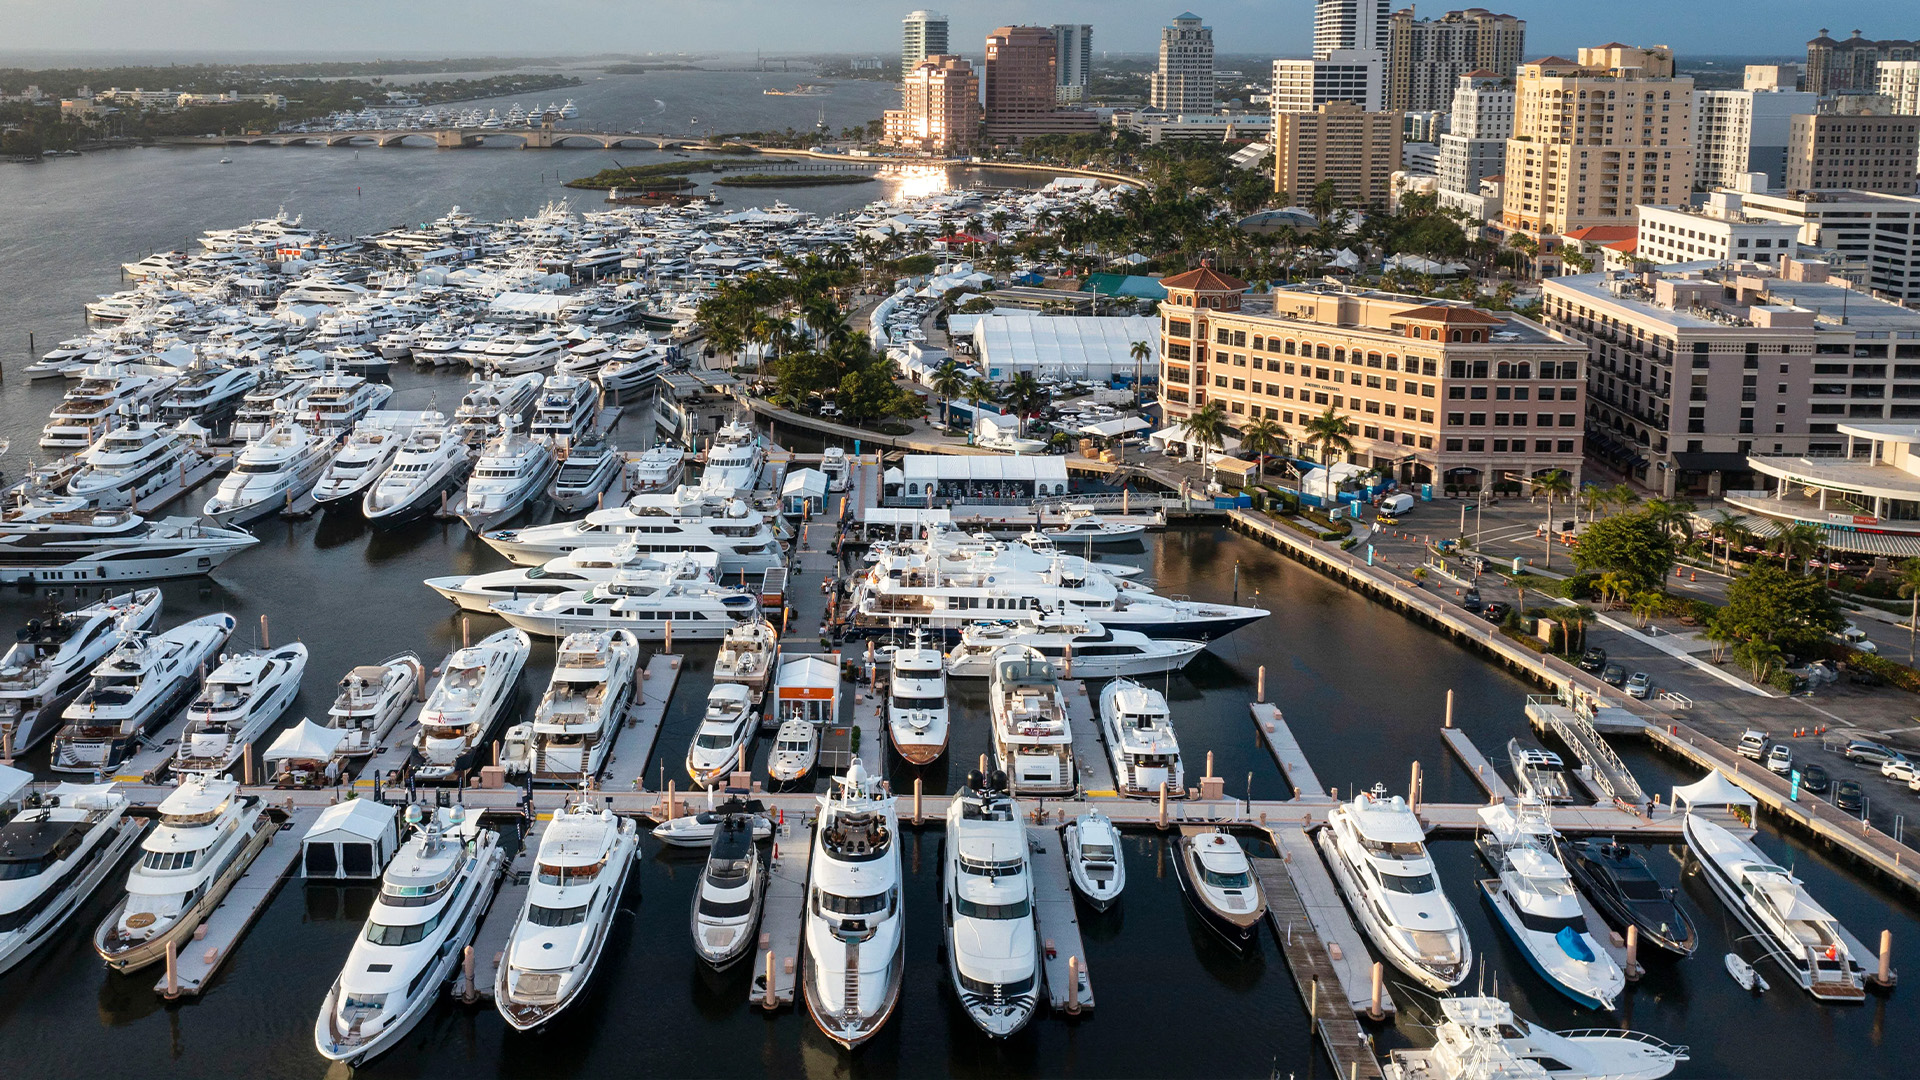 Palm Beach International Boat Show 2022